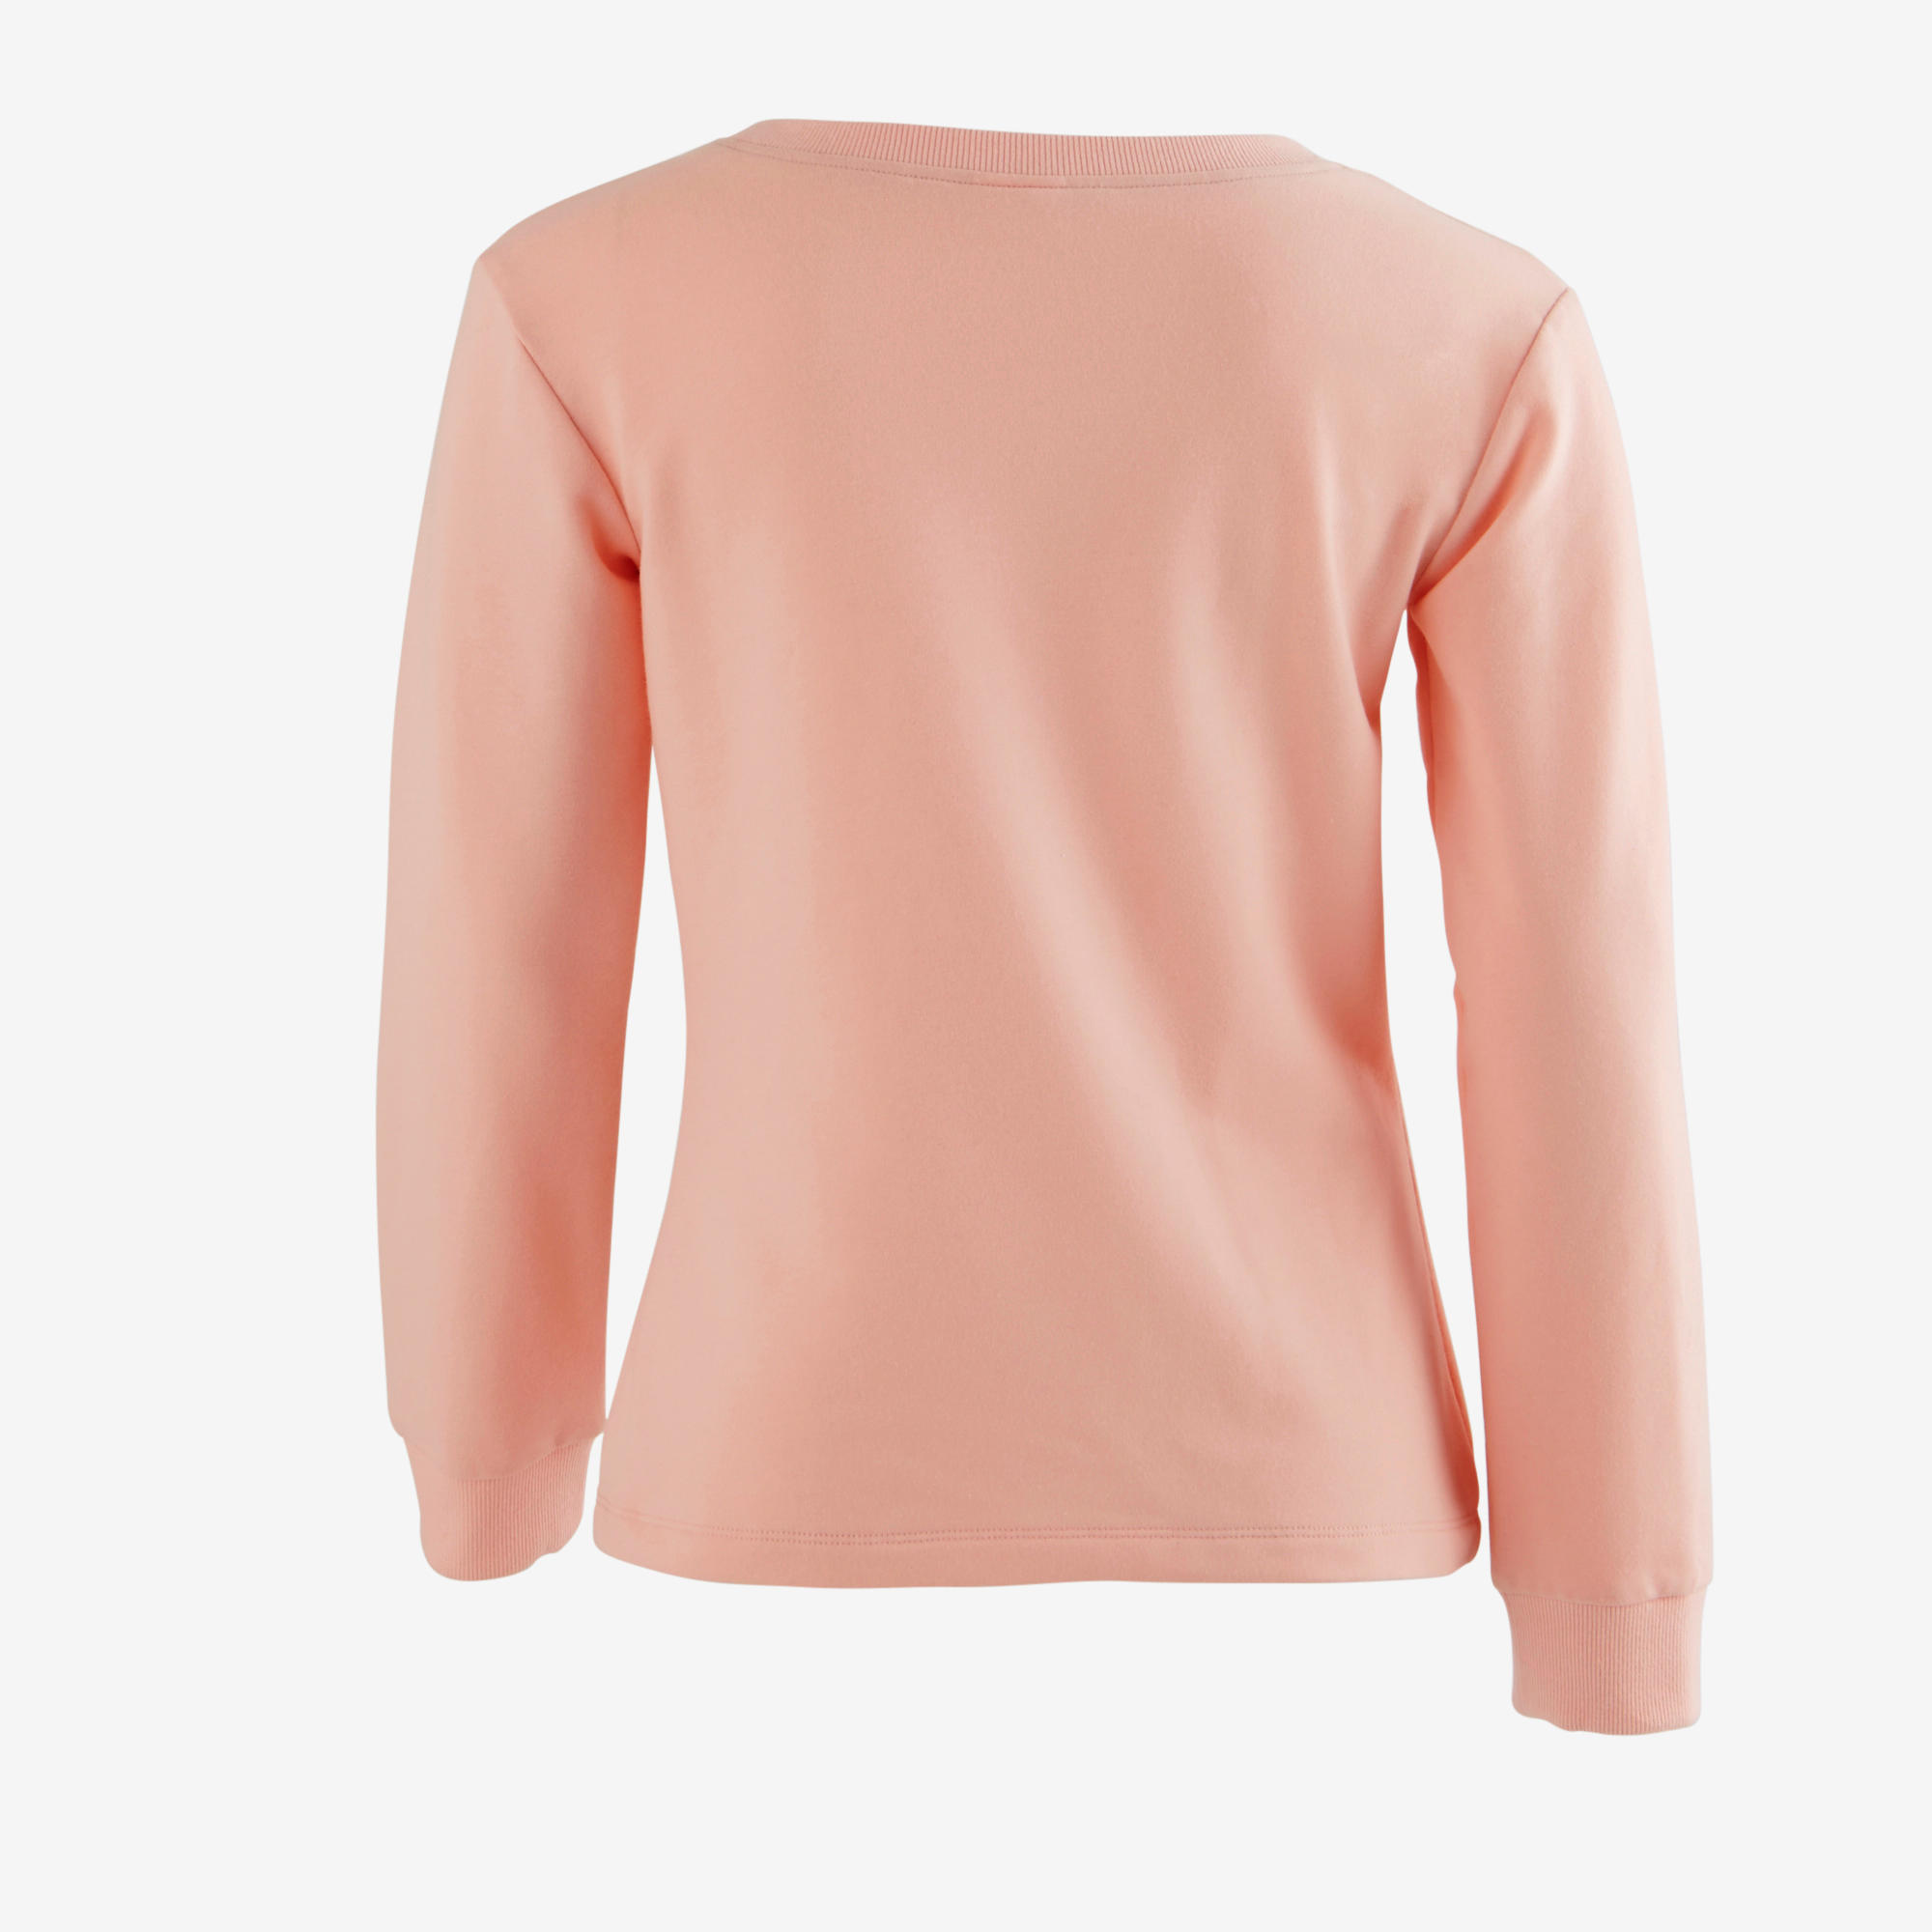 100 Girls' Gym Sweatshirt - Pink 4/5